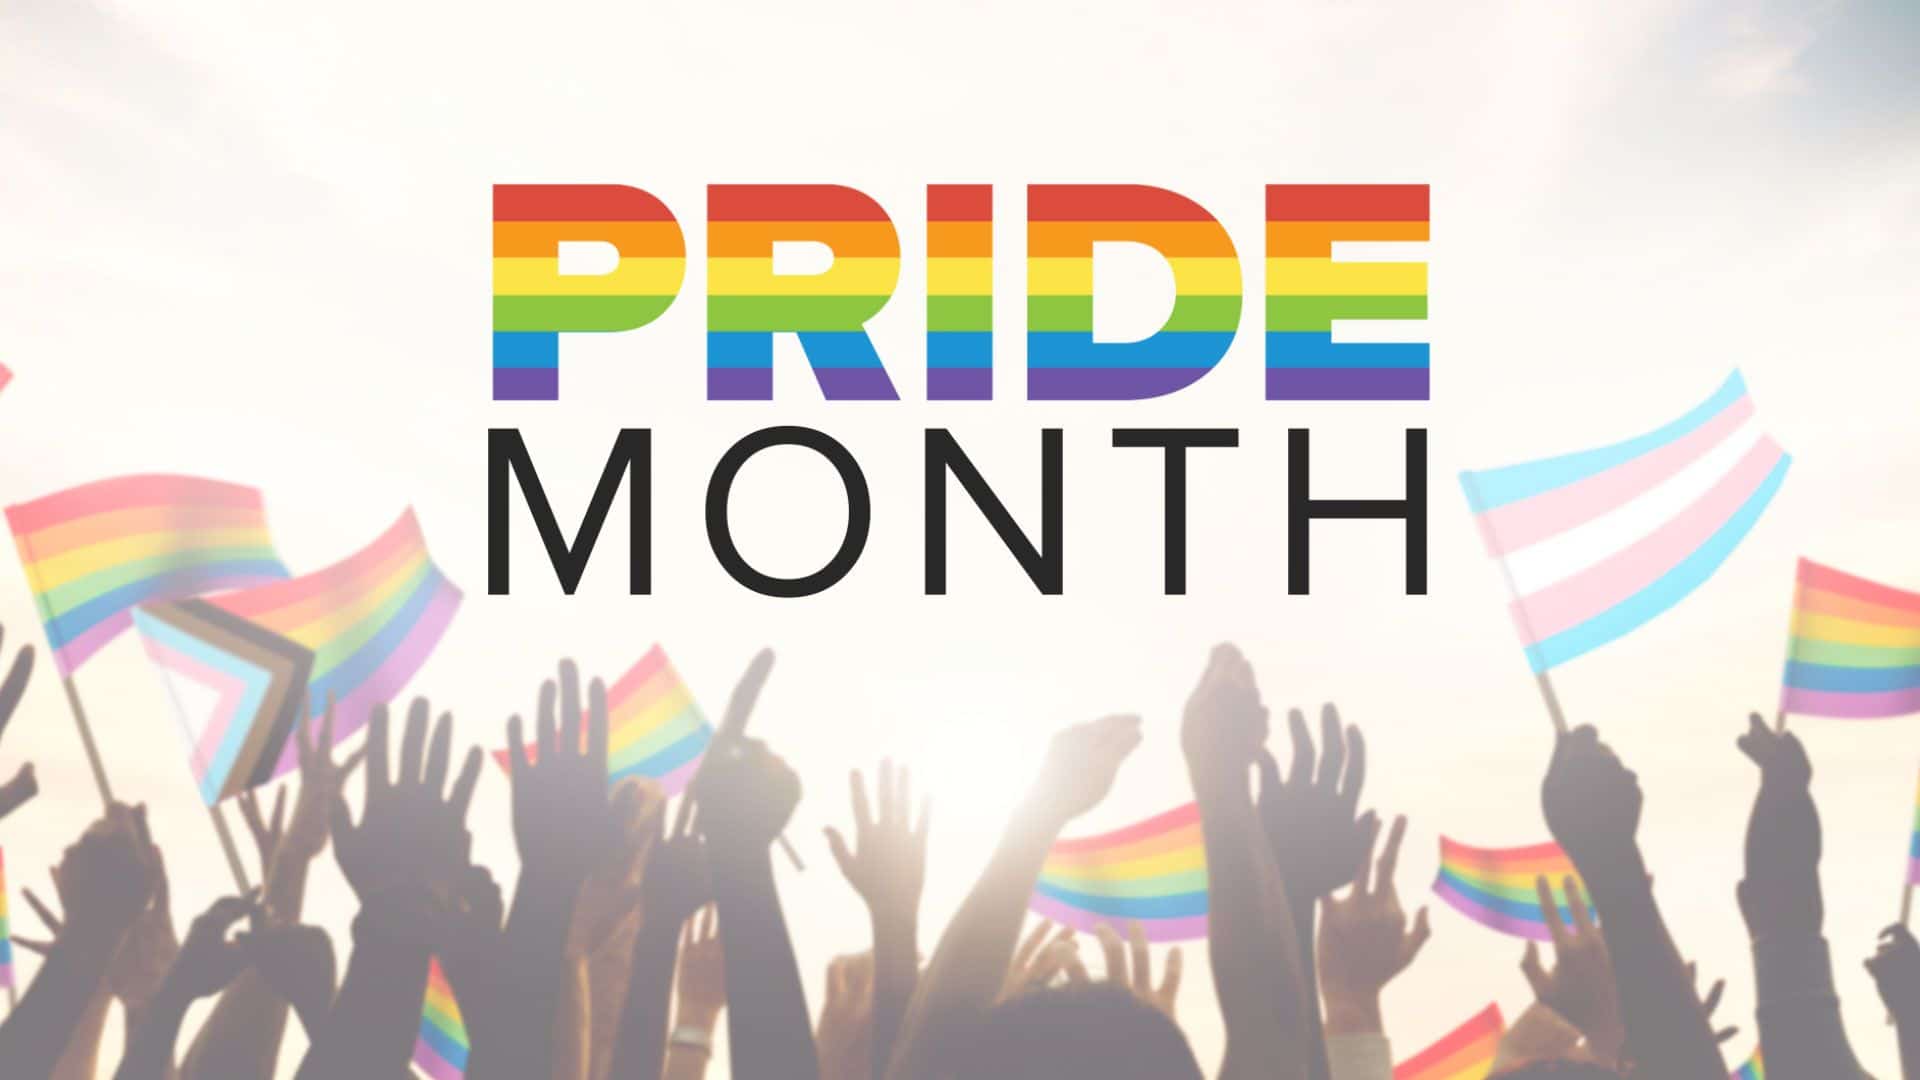 Happy Pride Month! 🏳️‍🌈